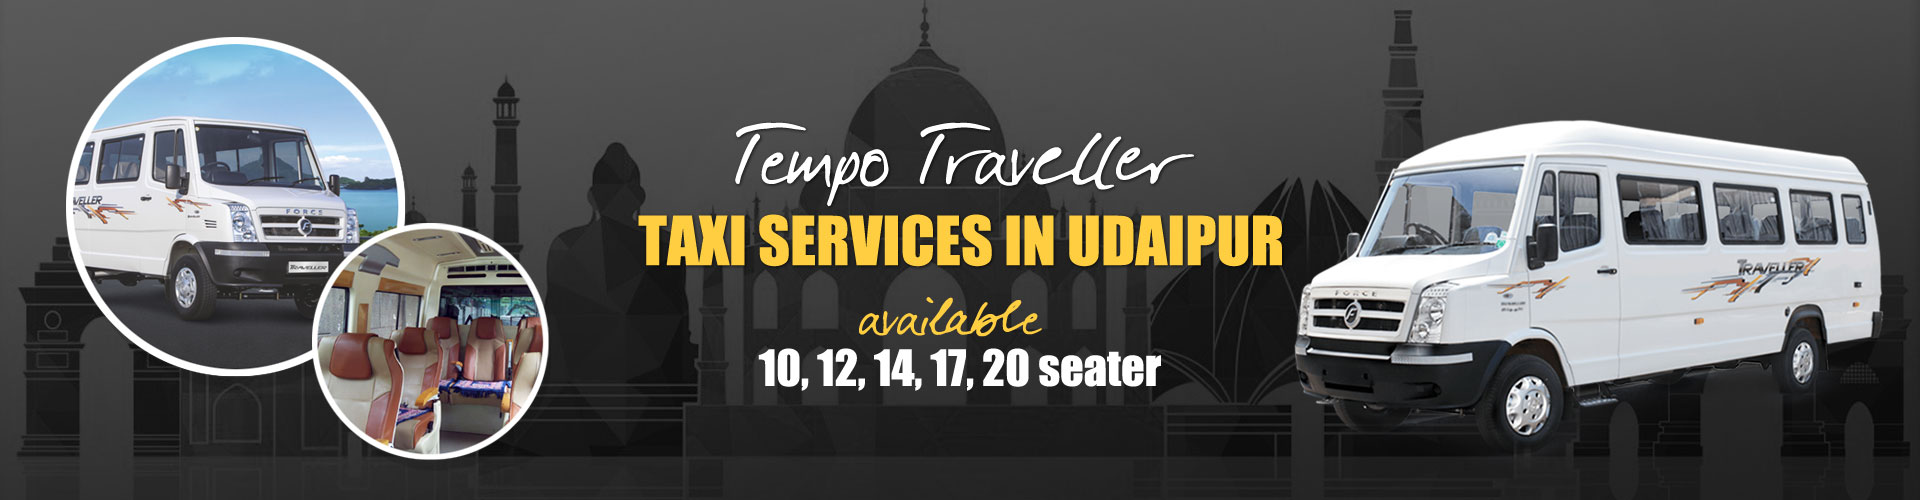 Tempo Traveller in Udaipur - Mateshwari Tours